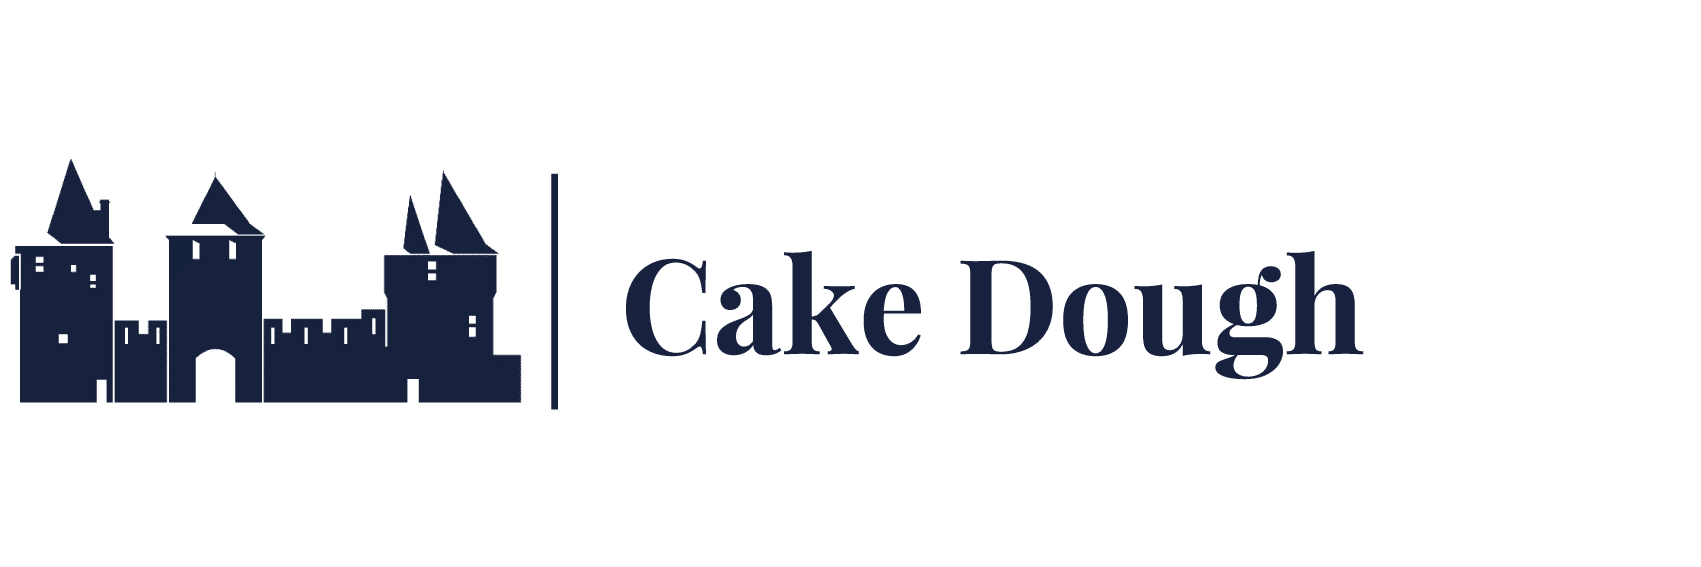 mix-logo-chateau-fougeres-gamme-cake-dough